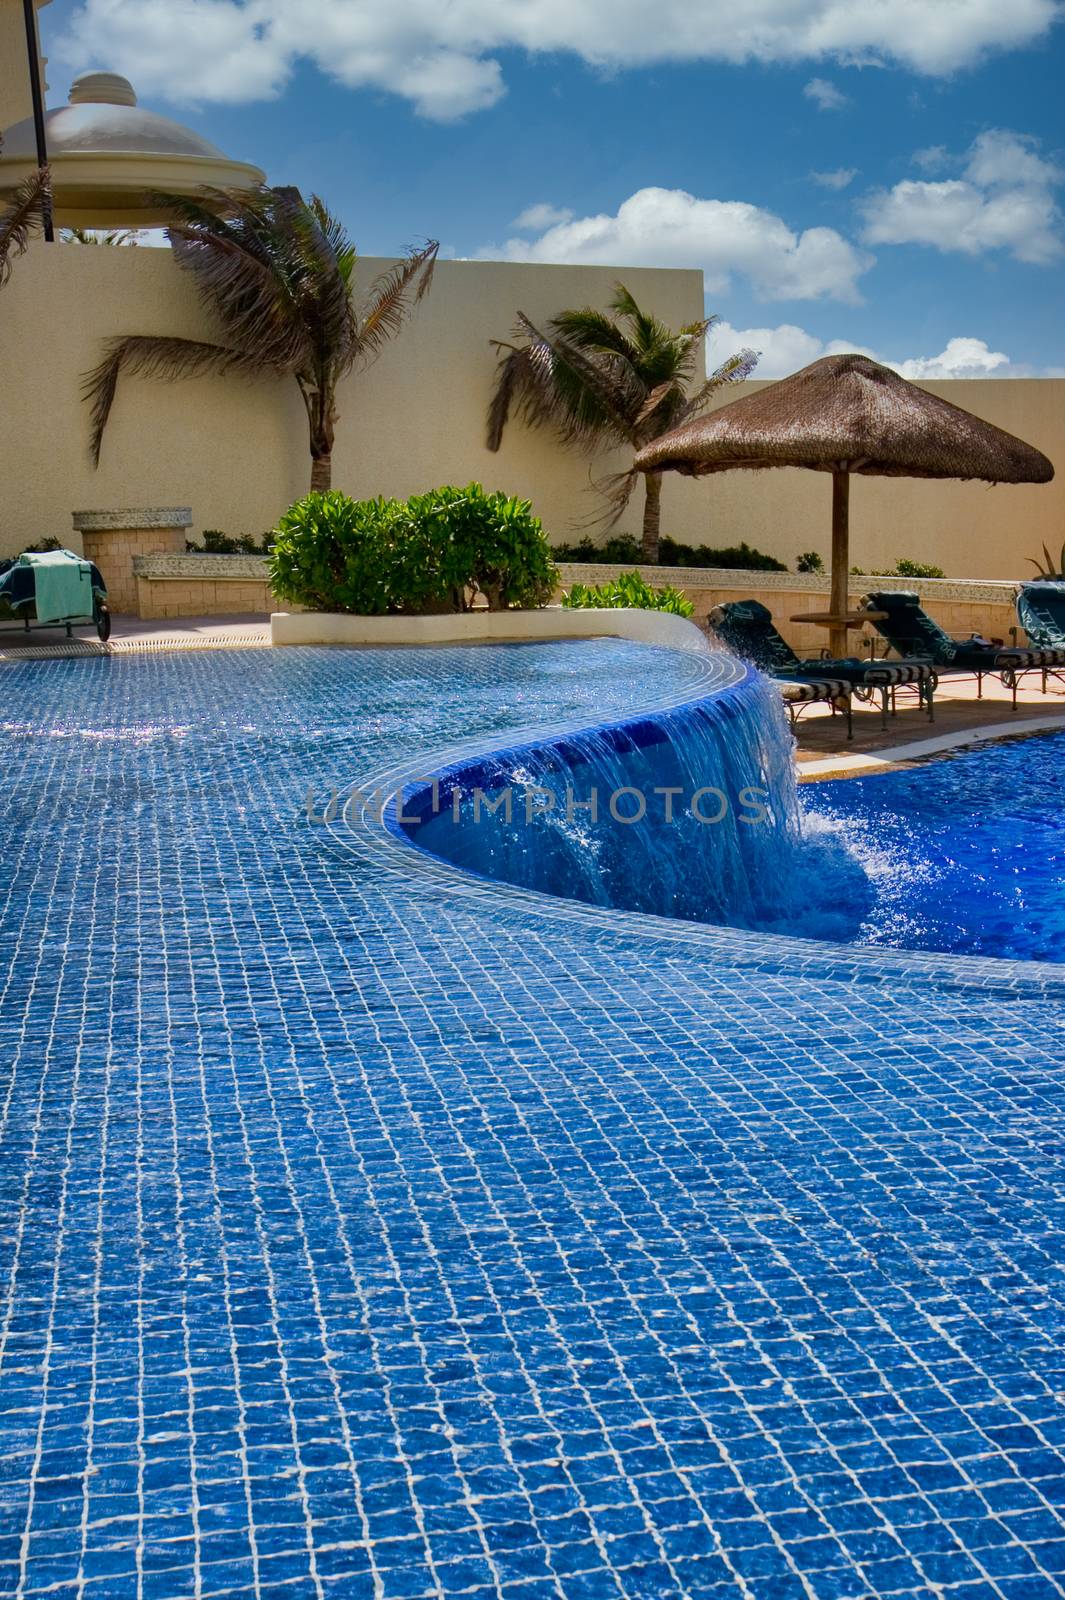 Blue Tile Resort Pool by dbvirago